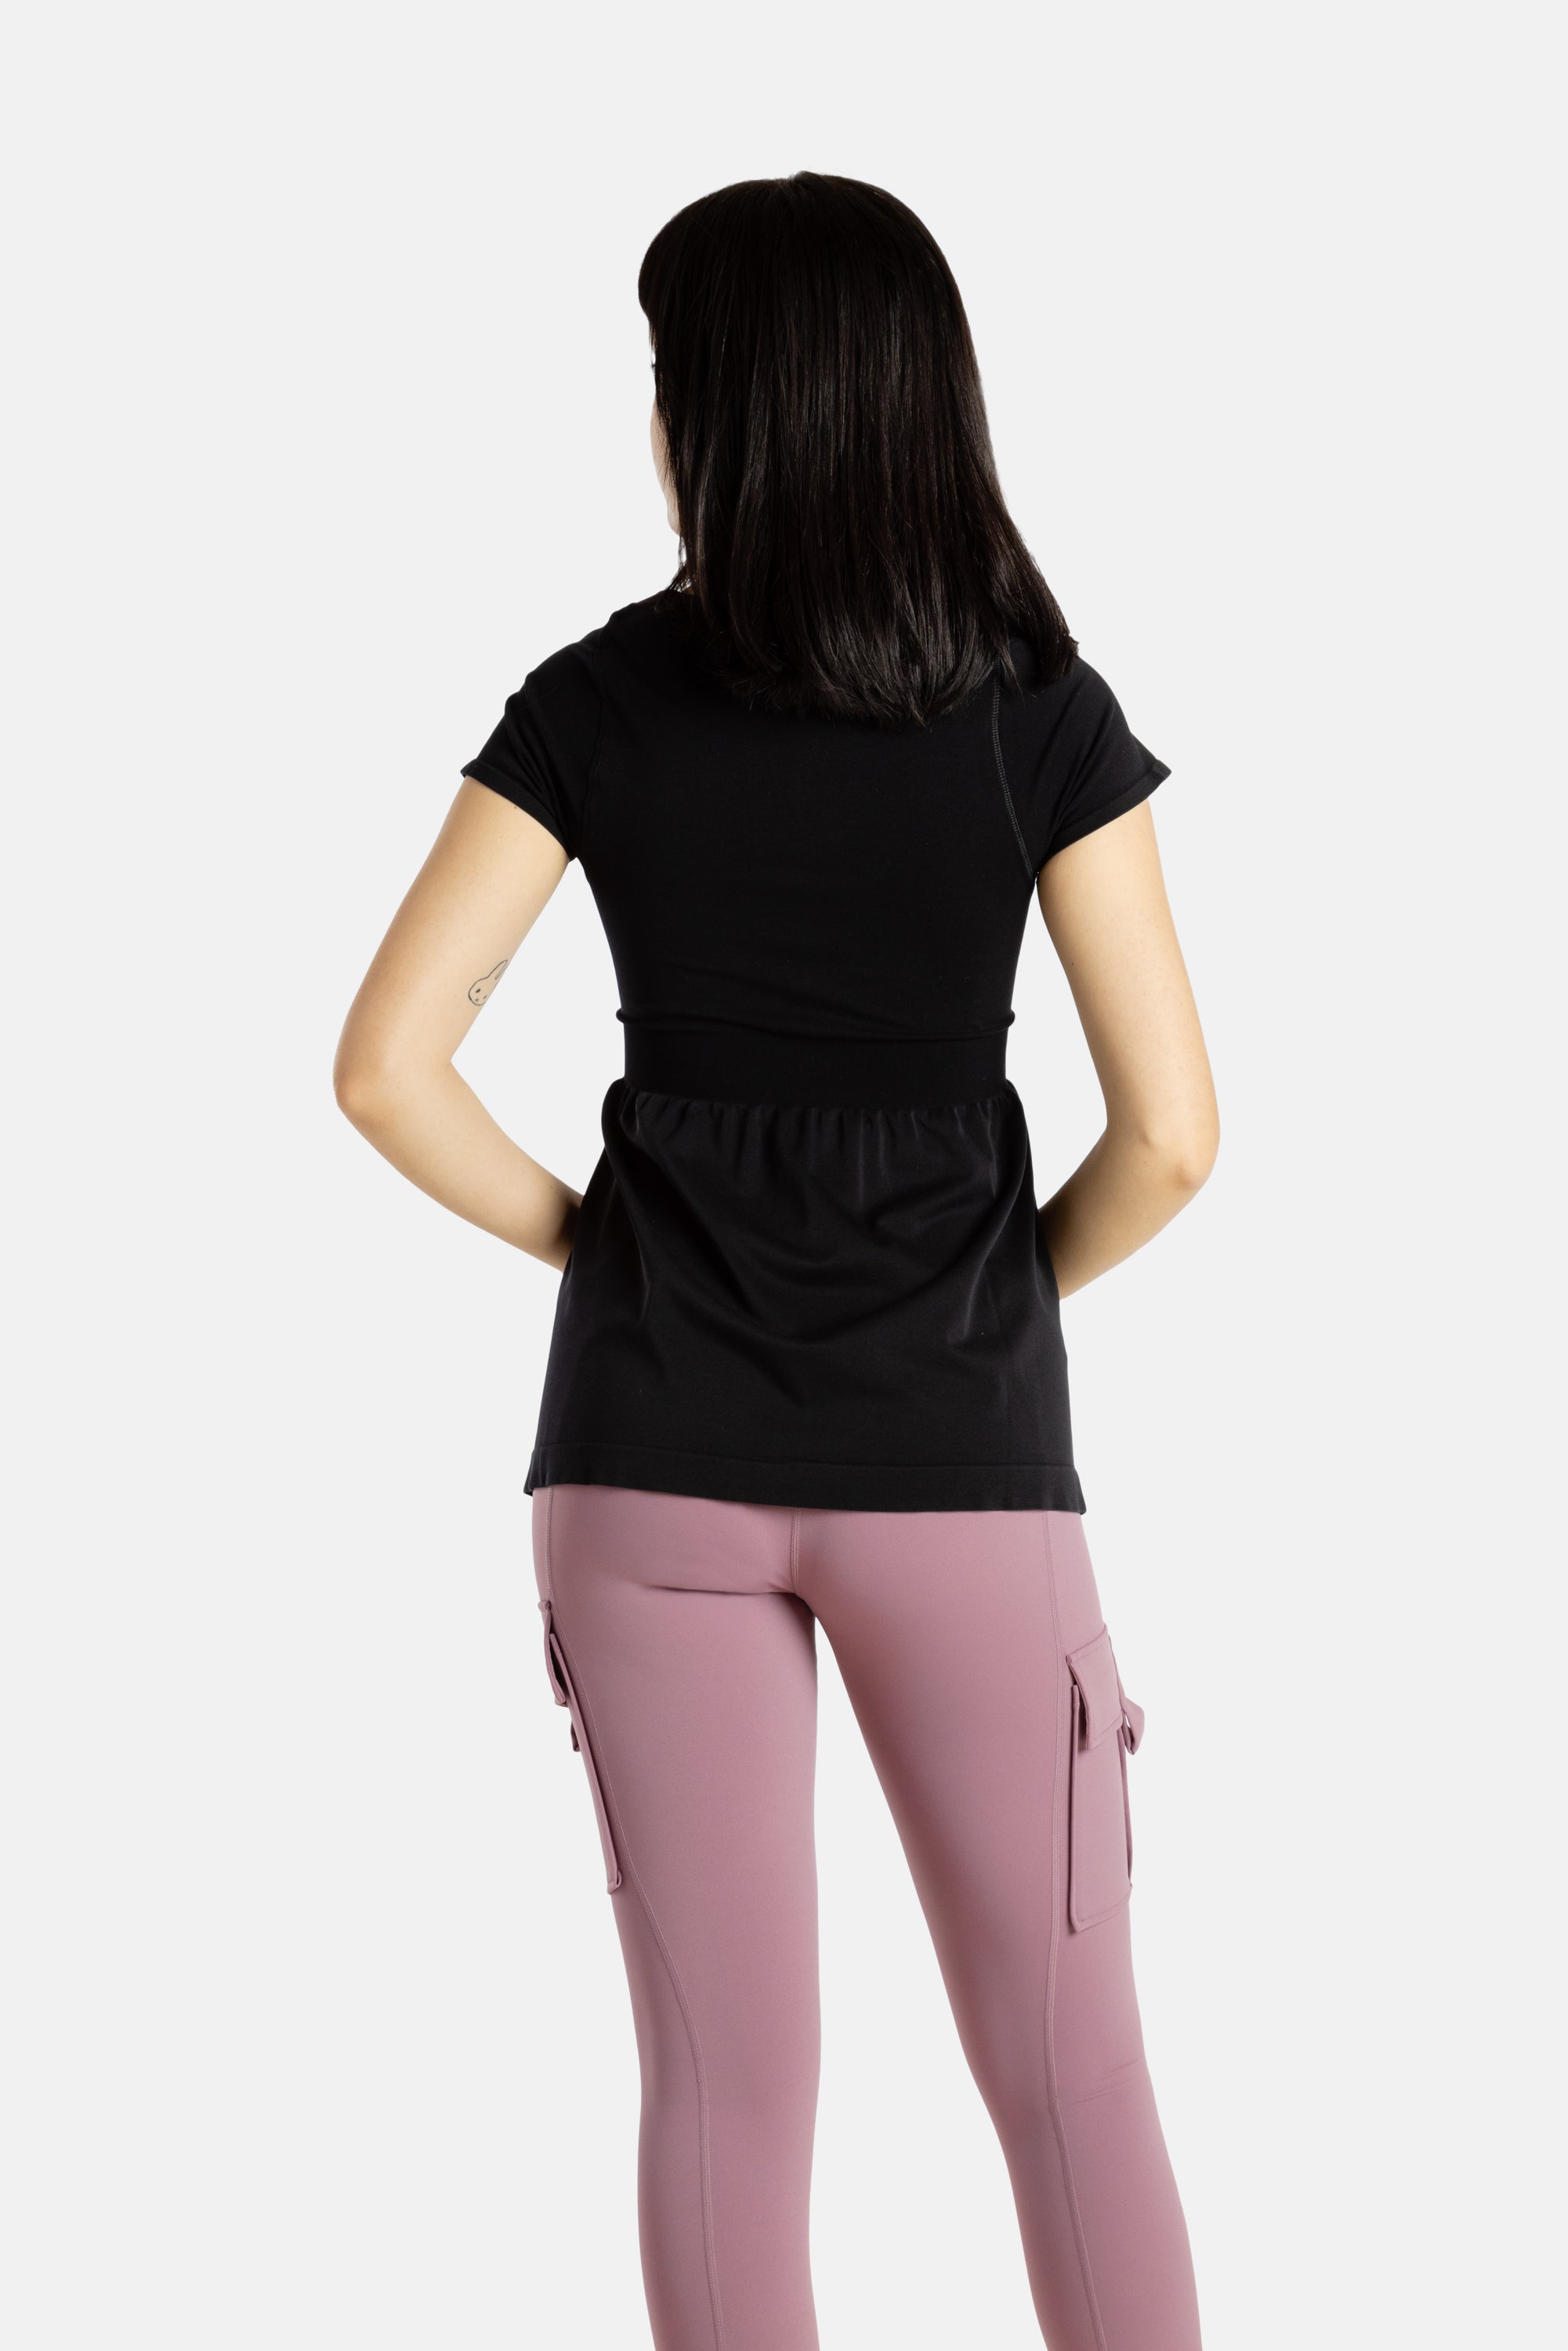 The back of Sophia (A woman with long black hair),wearing the No Limbits Adaptive Women's Black Sensory Blouse with mauve leggings.